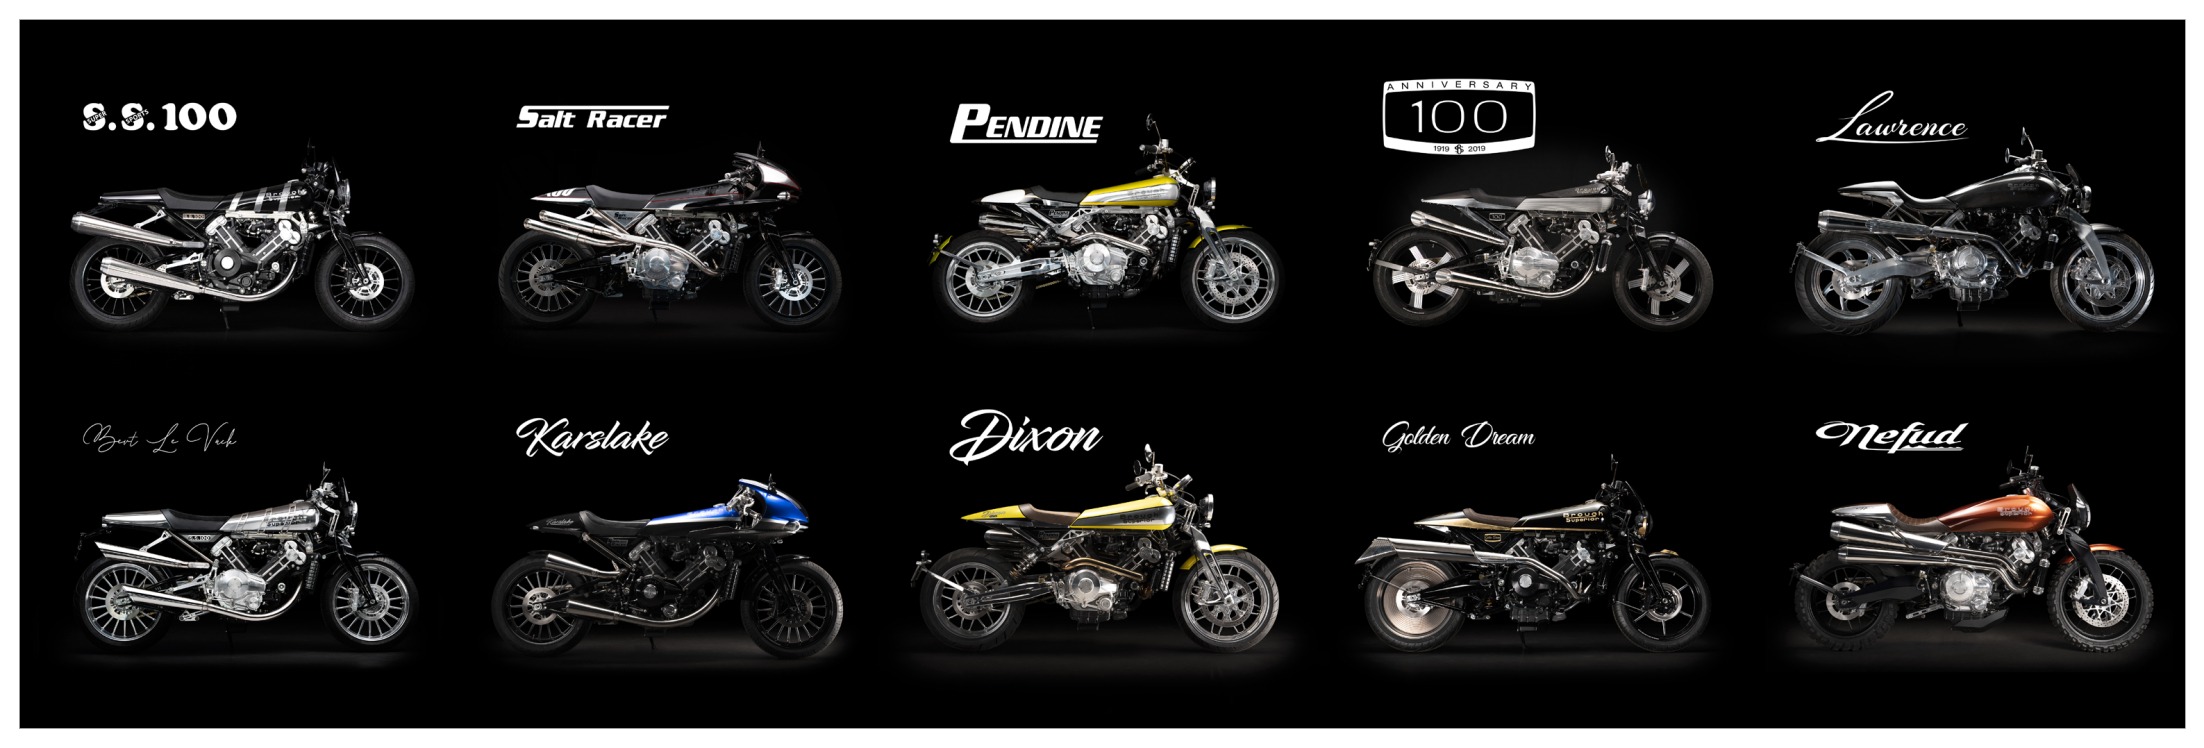 Boxer Design Brough Superior model range motorcycles